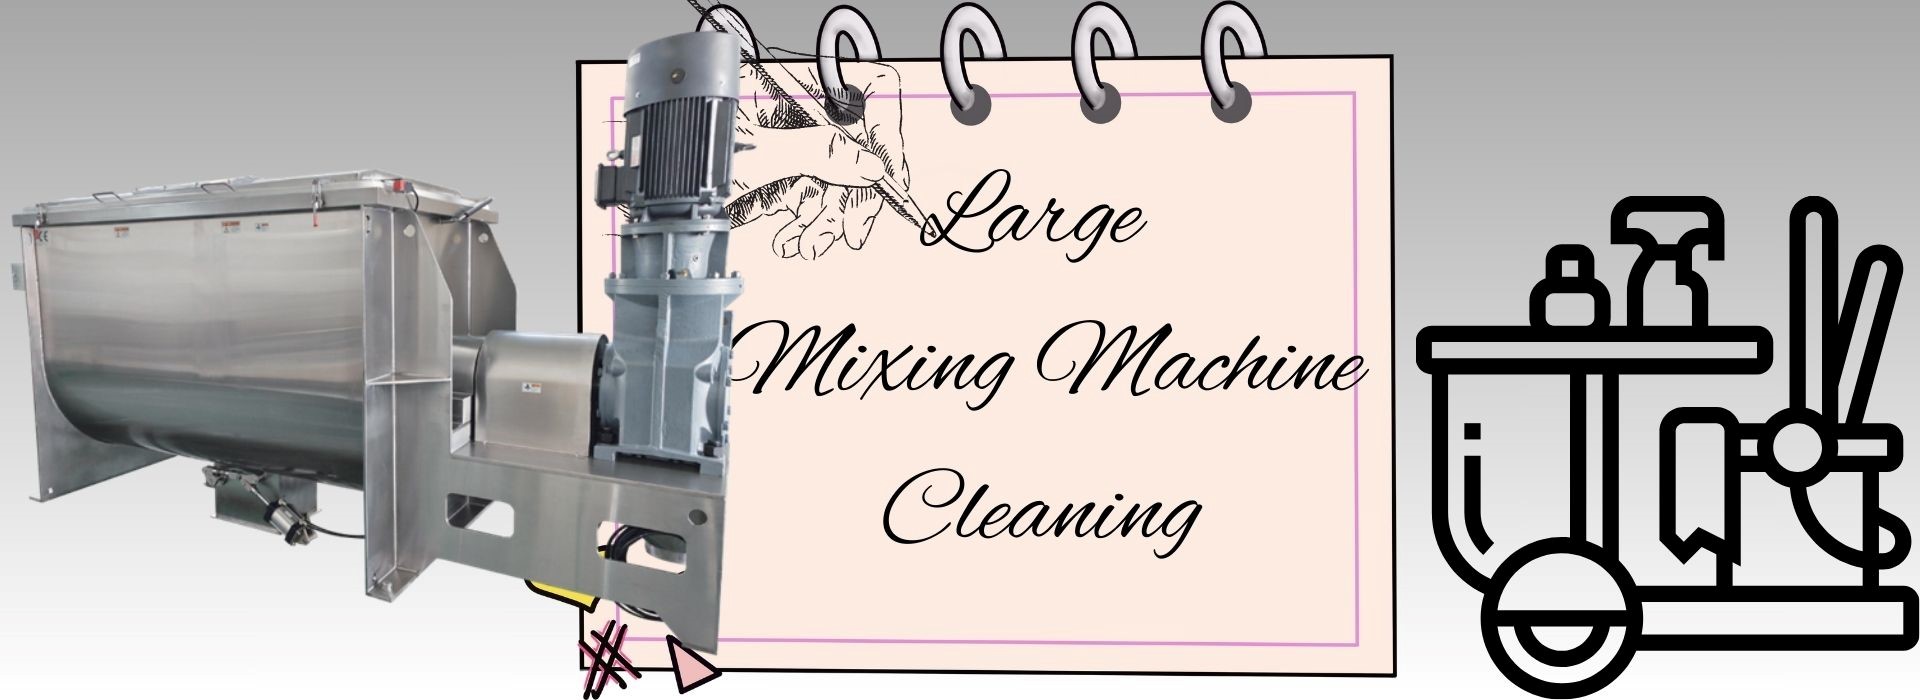 5 métodos para limpar a grande máquina de mistura1